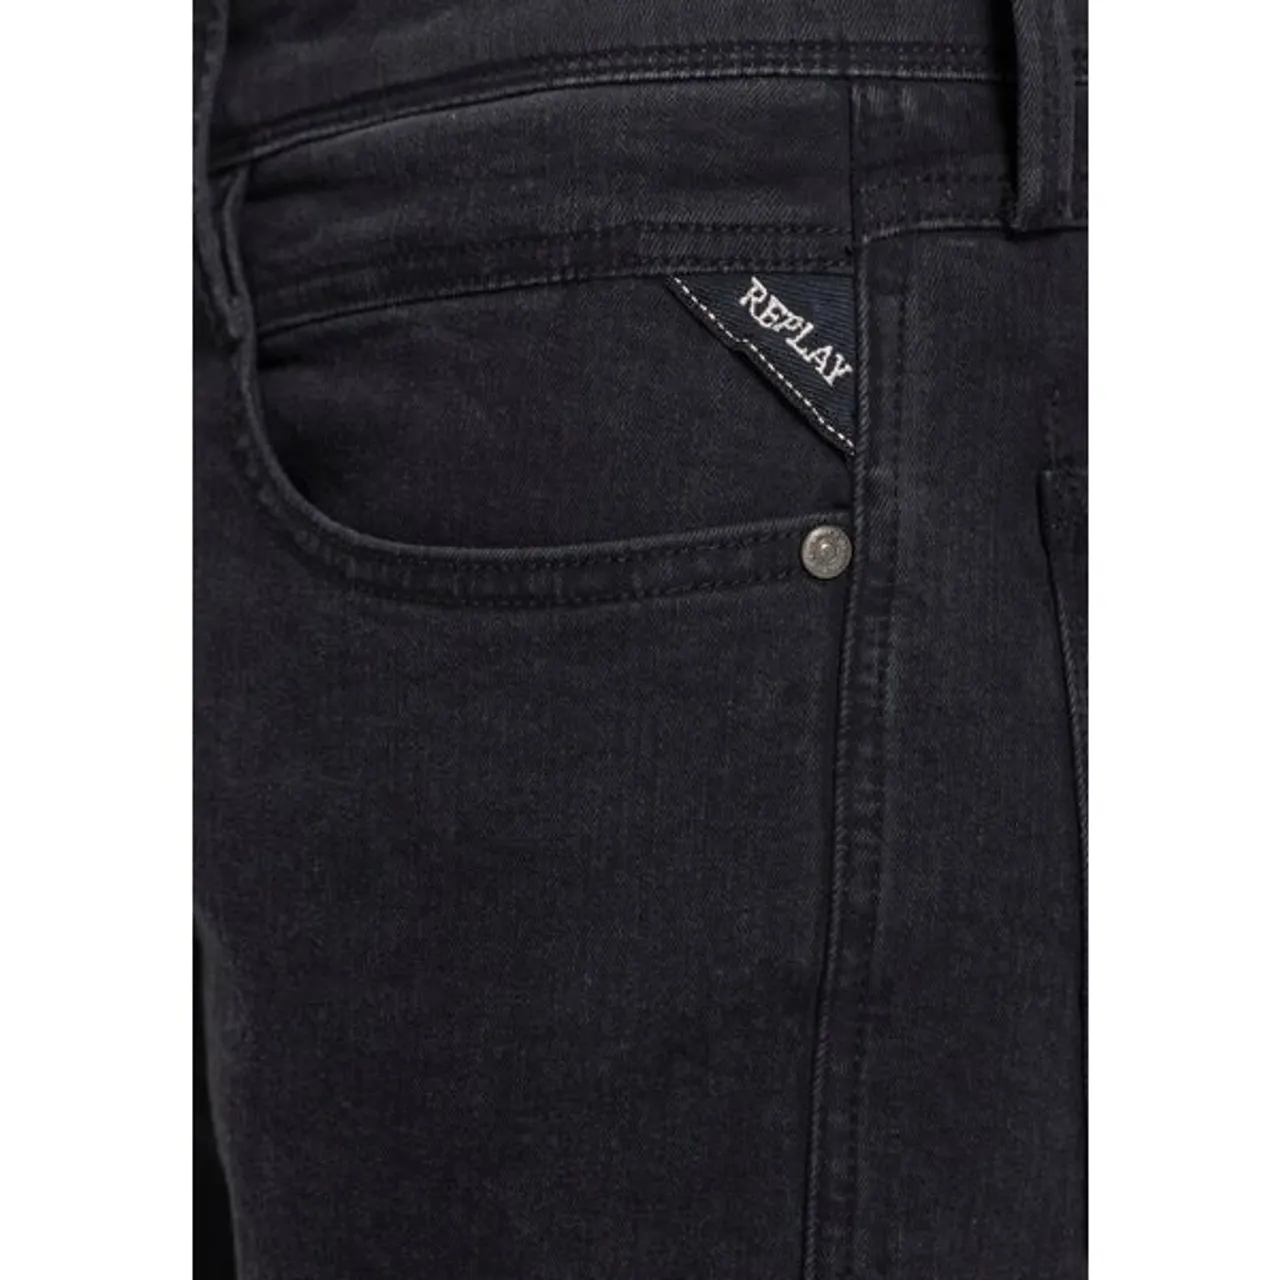 Slim-fit-Jeans REPLAY "ANBASS" Gr. 34, Länge 36, schwarz (black, wash) Herren Jeans Slim Fit